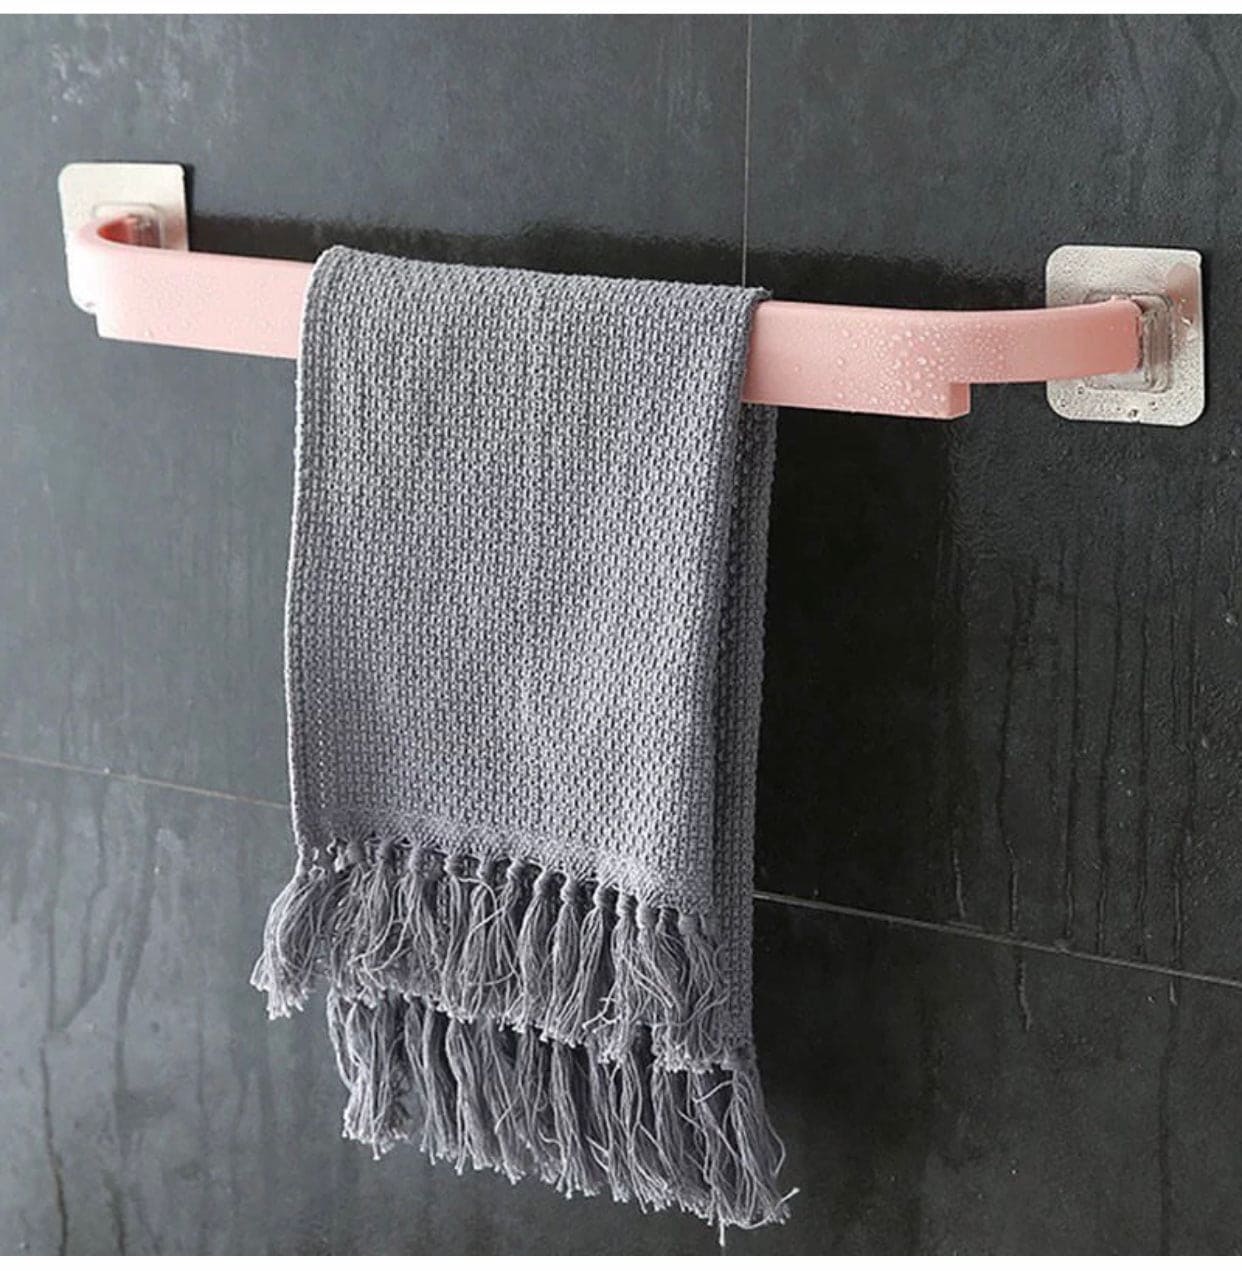 Towel Holder For Bathroom, Self Adhesive Punch-Free Plastic Bathroom Towel Bar, Modern Towel Rail Bathroom for Home Kitchen Bathroom, Towel Stand